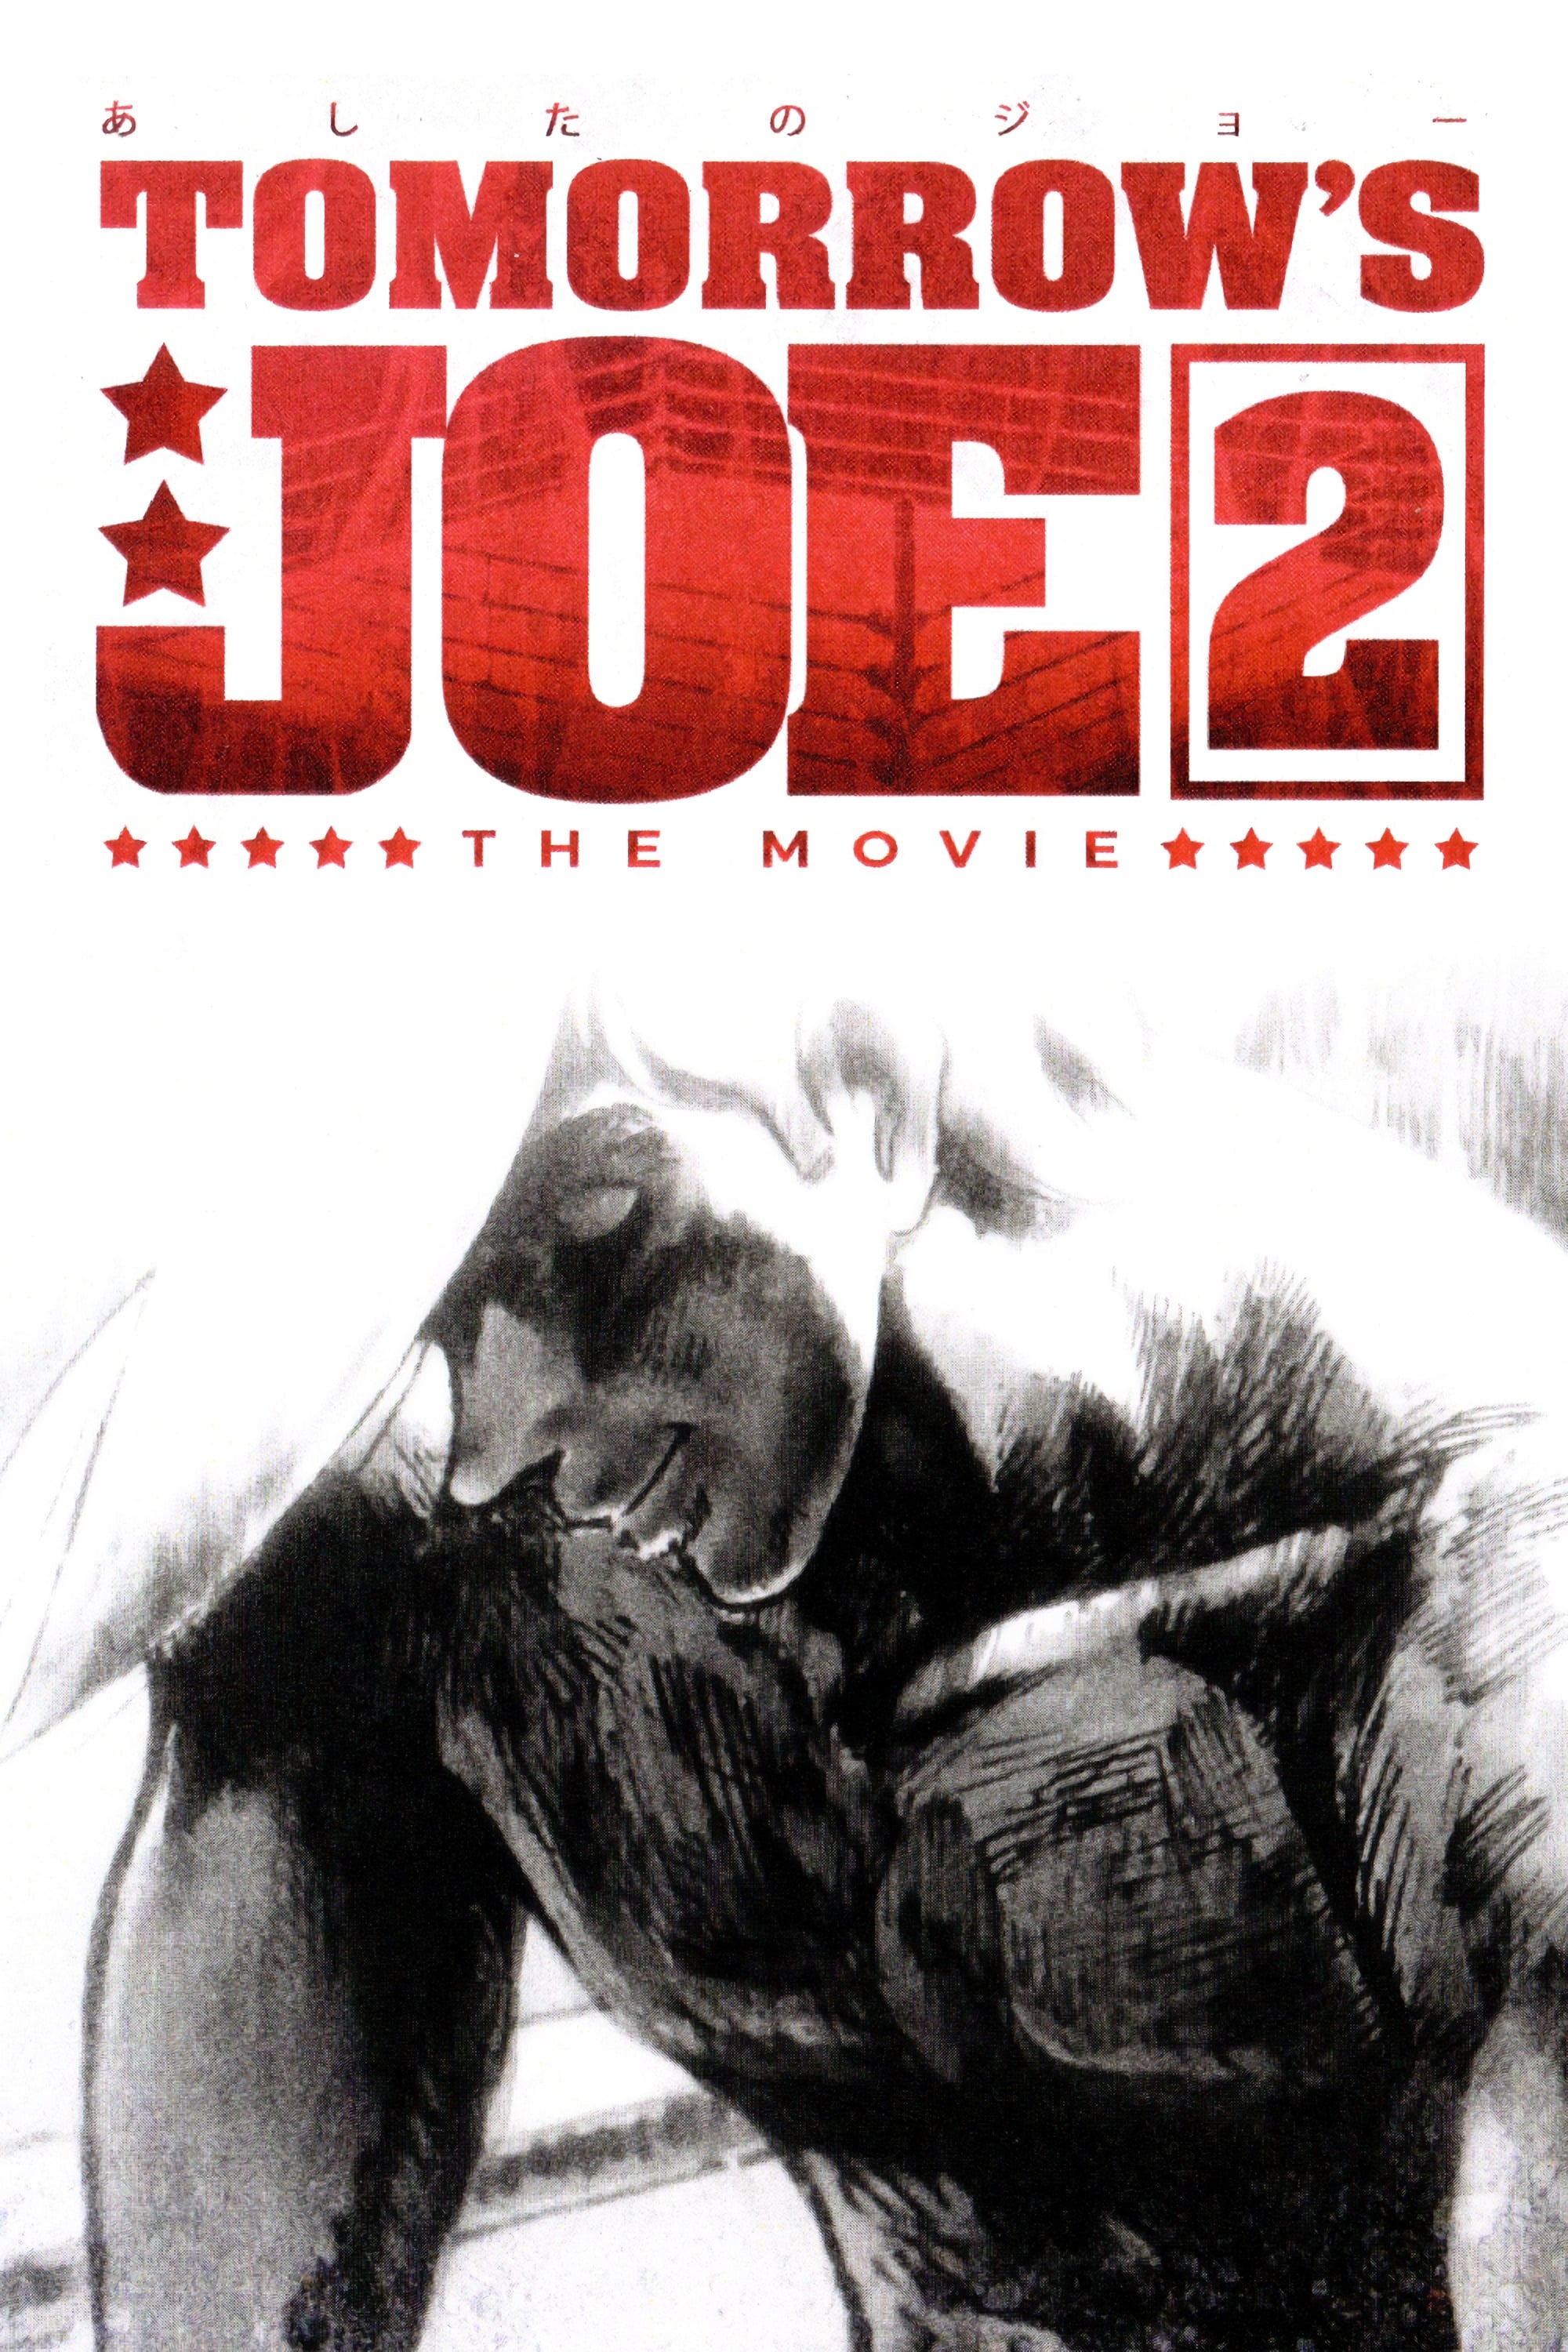 Tomorrow's Joe 2 The Movie